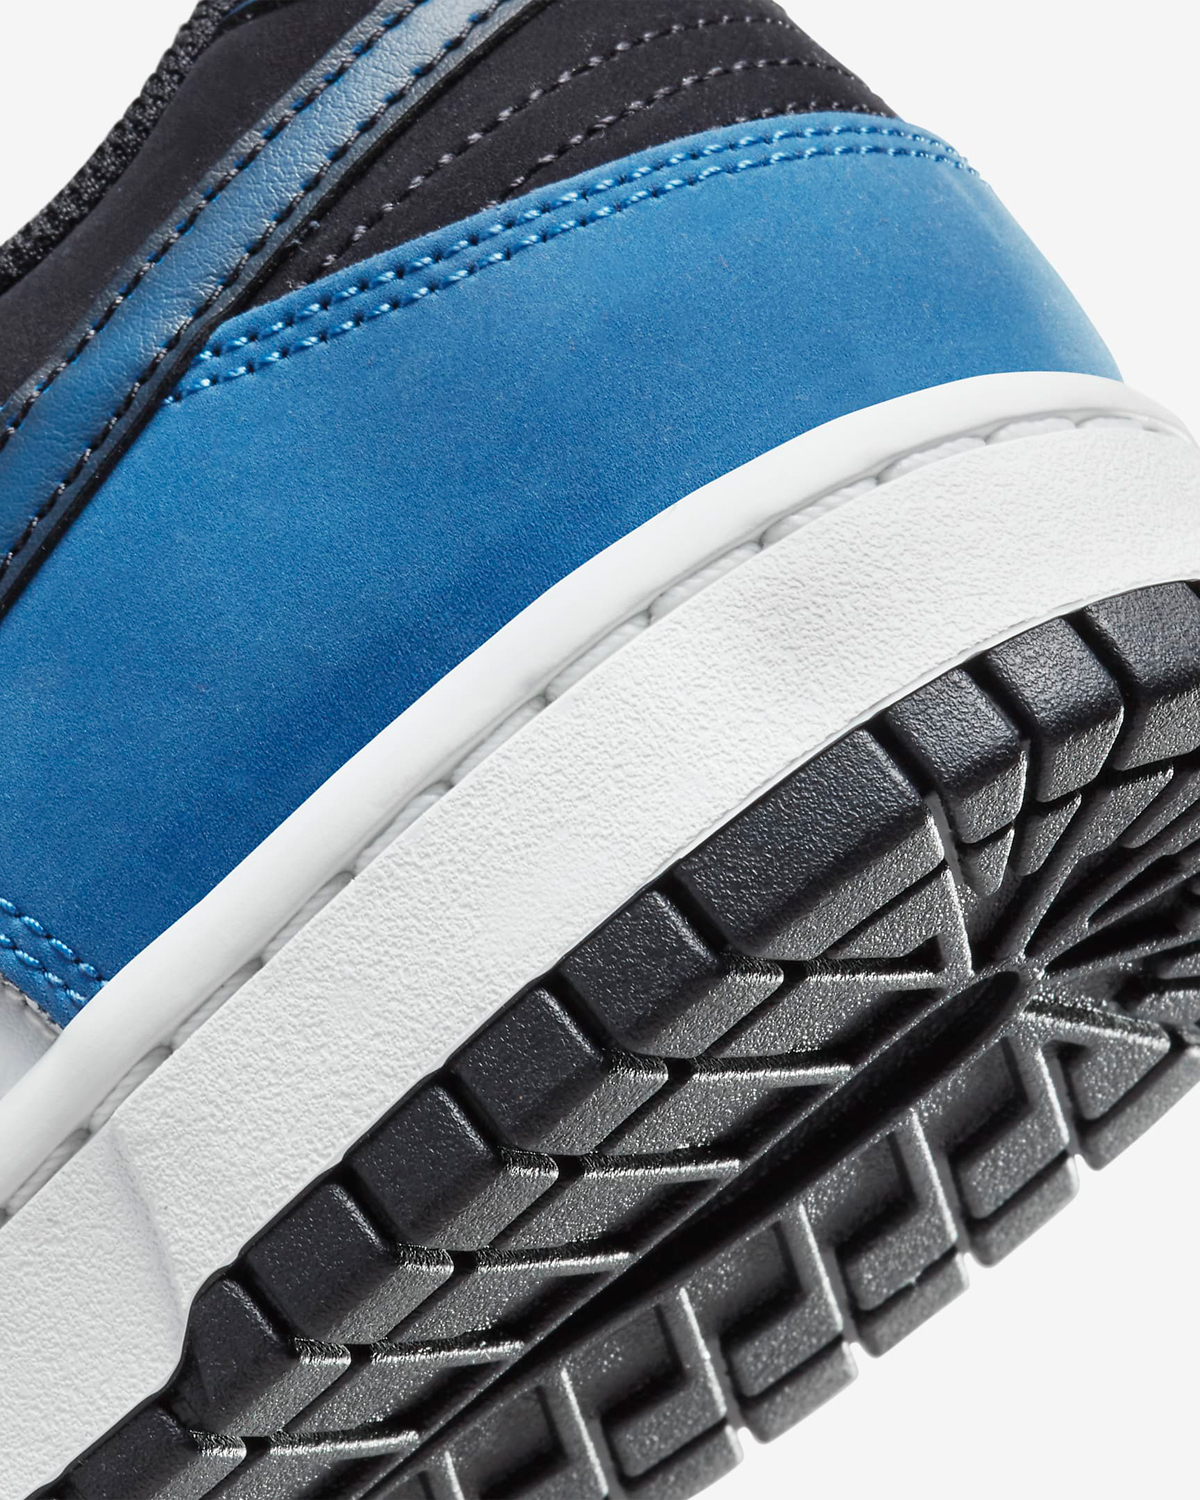 Nike-Dunk-Low-Industrial-Blue-8